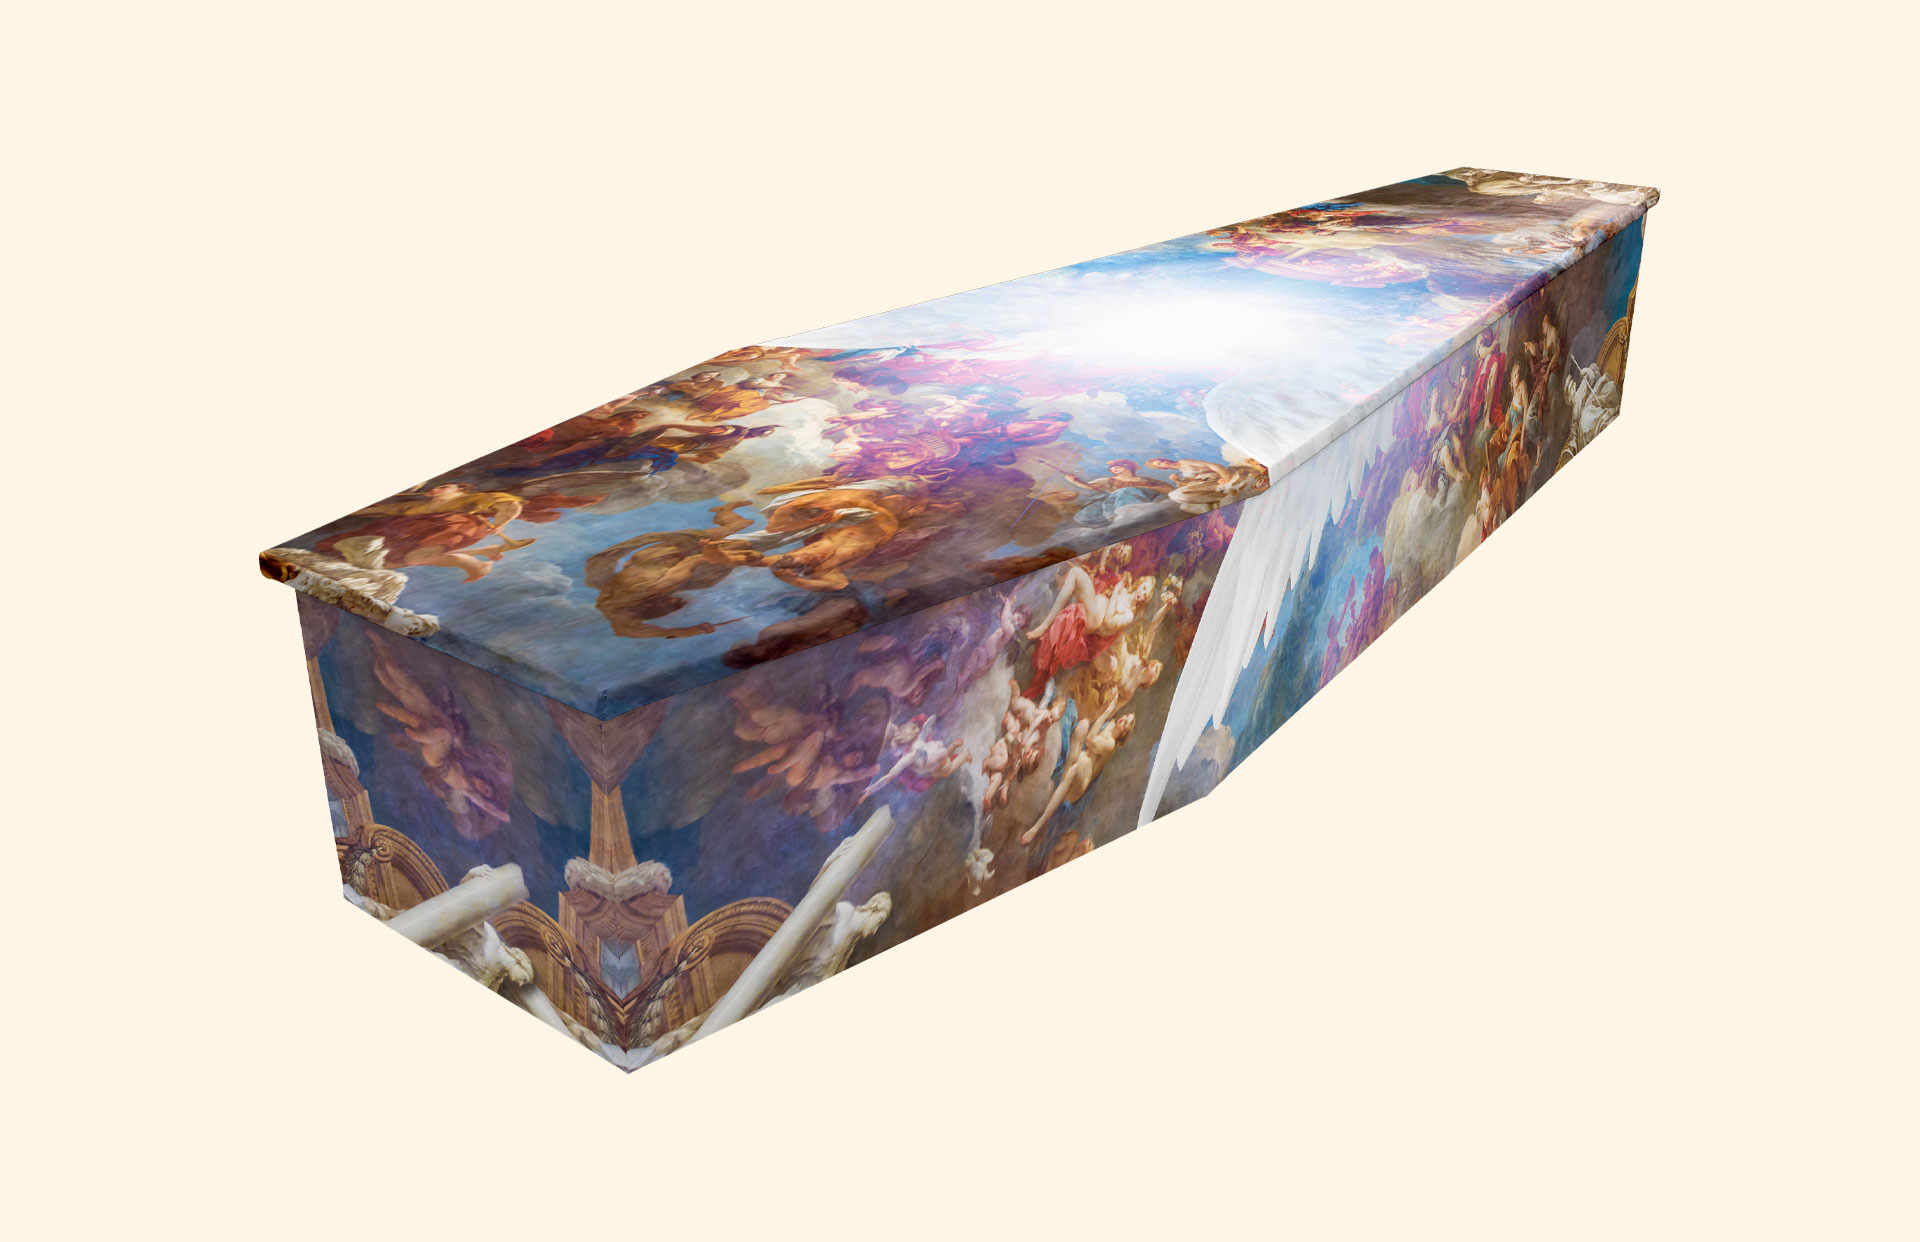 Vatican Wings design in cardboard coffin